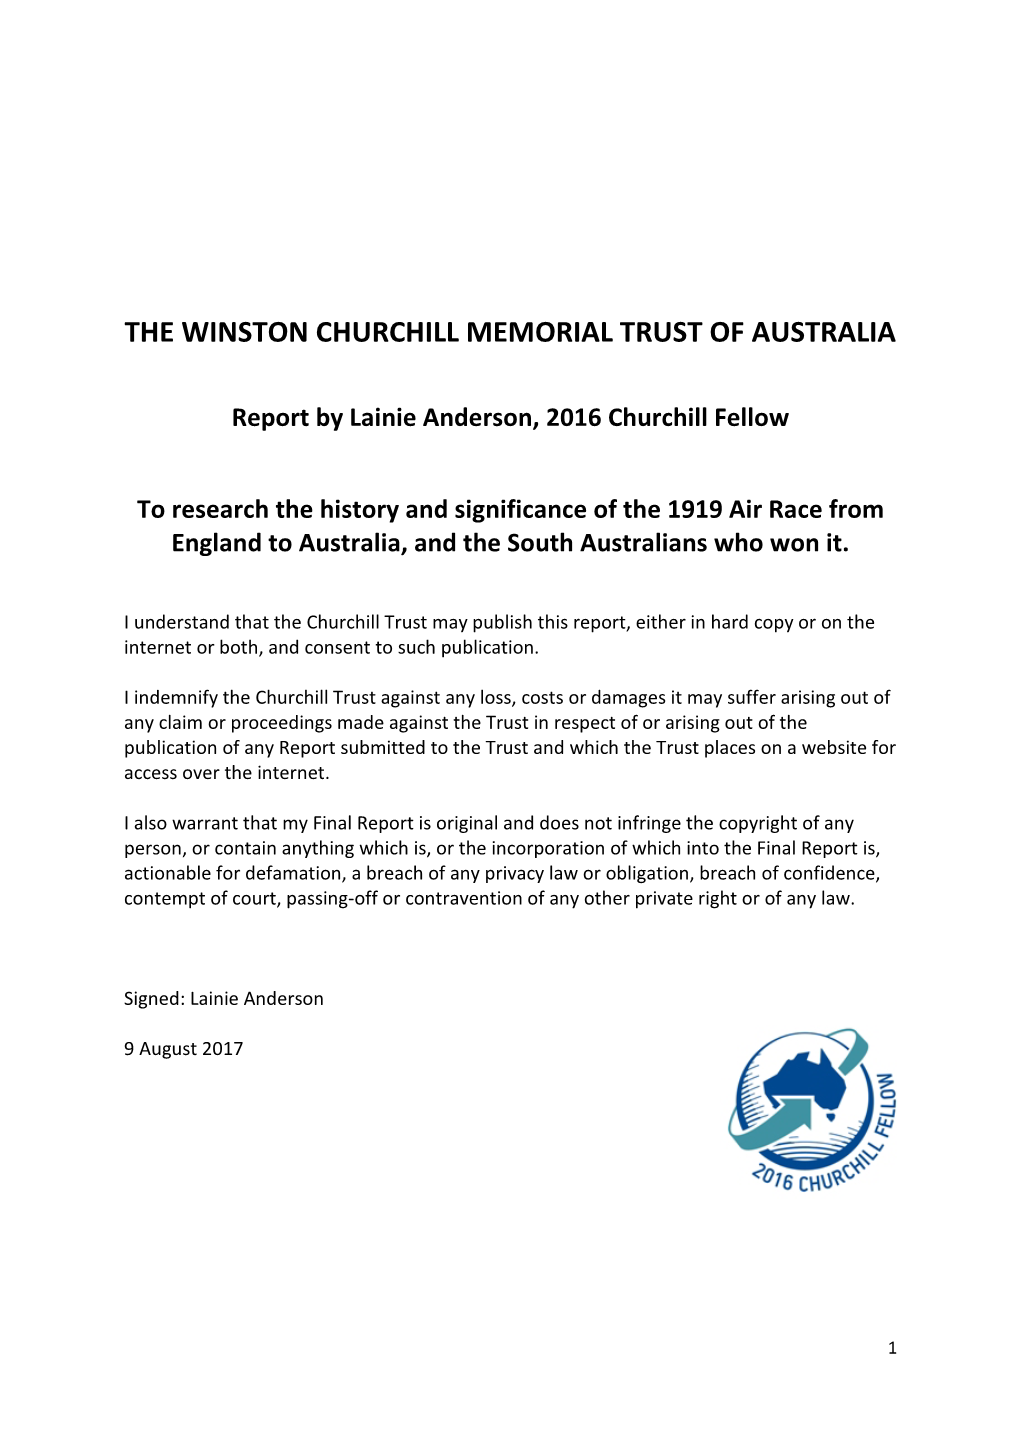 The Winston Churchill Memorial Trust of Australia